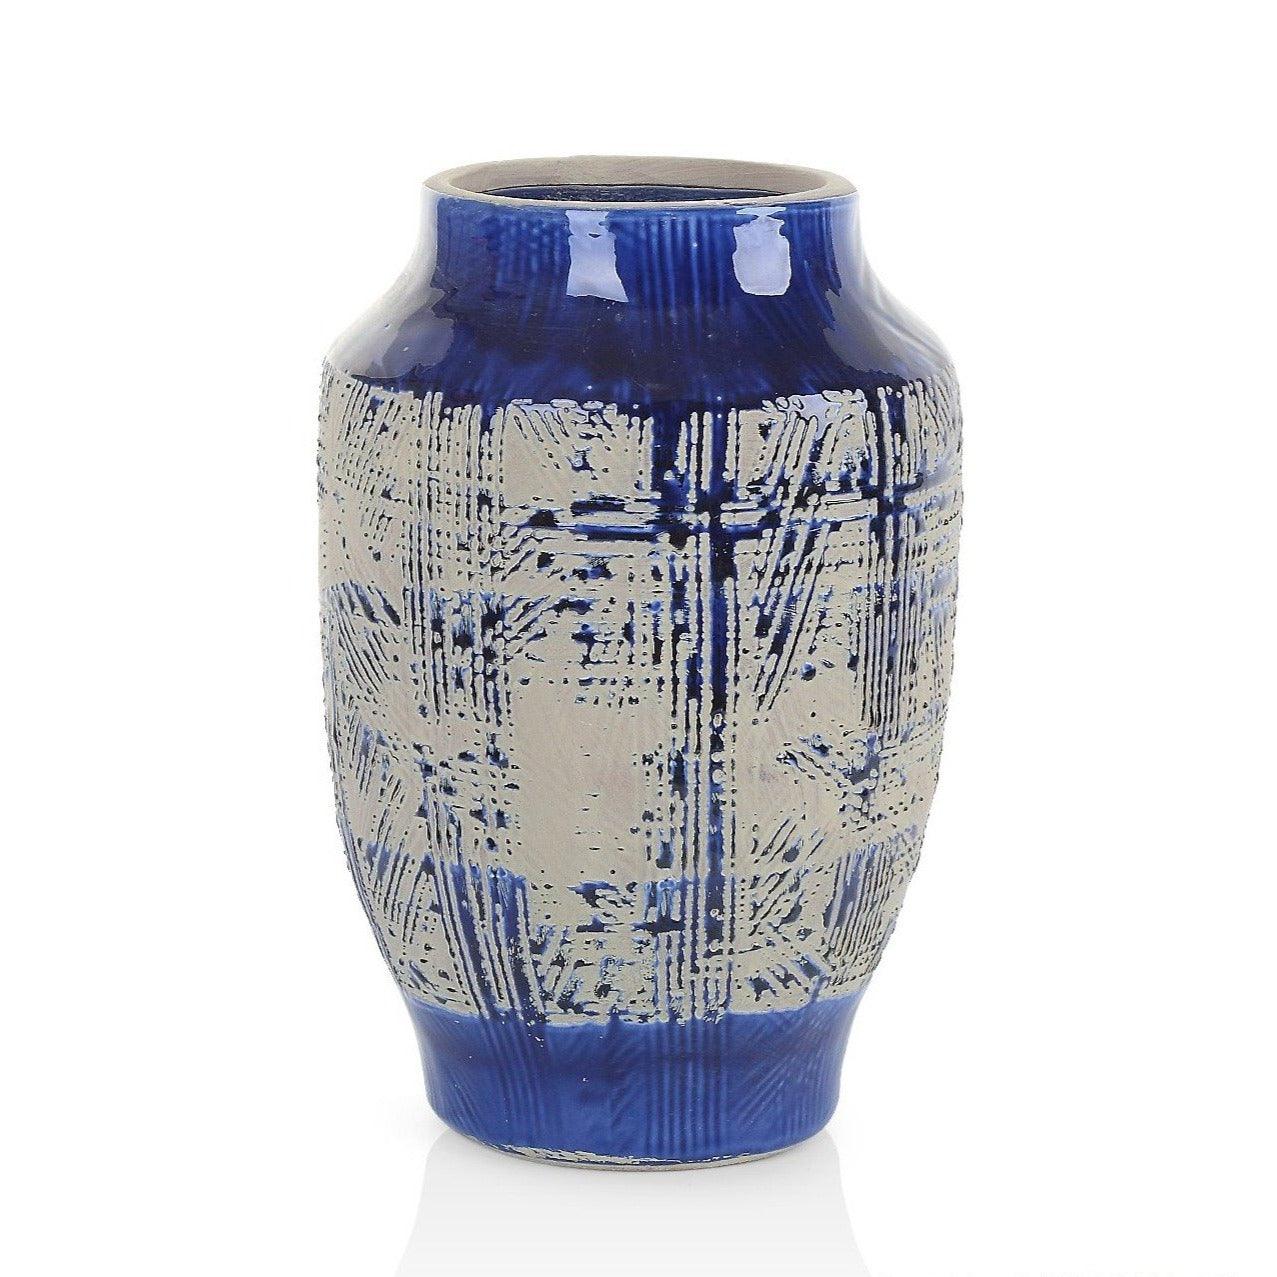 Rustic & Glaze Blue Ceramic Vase - BUBULAND HOME